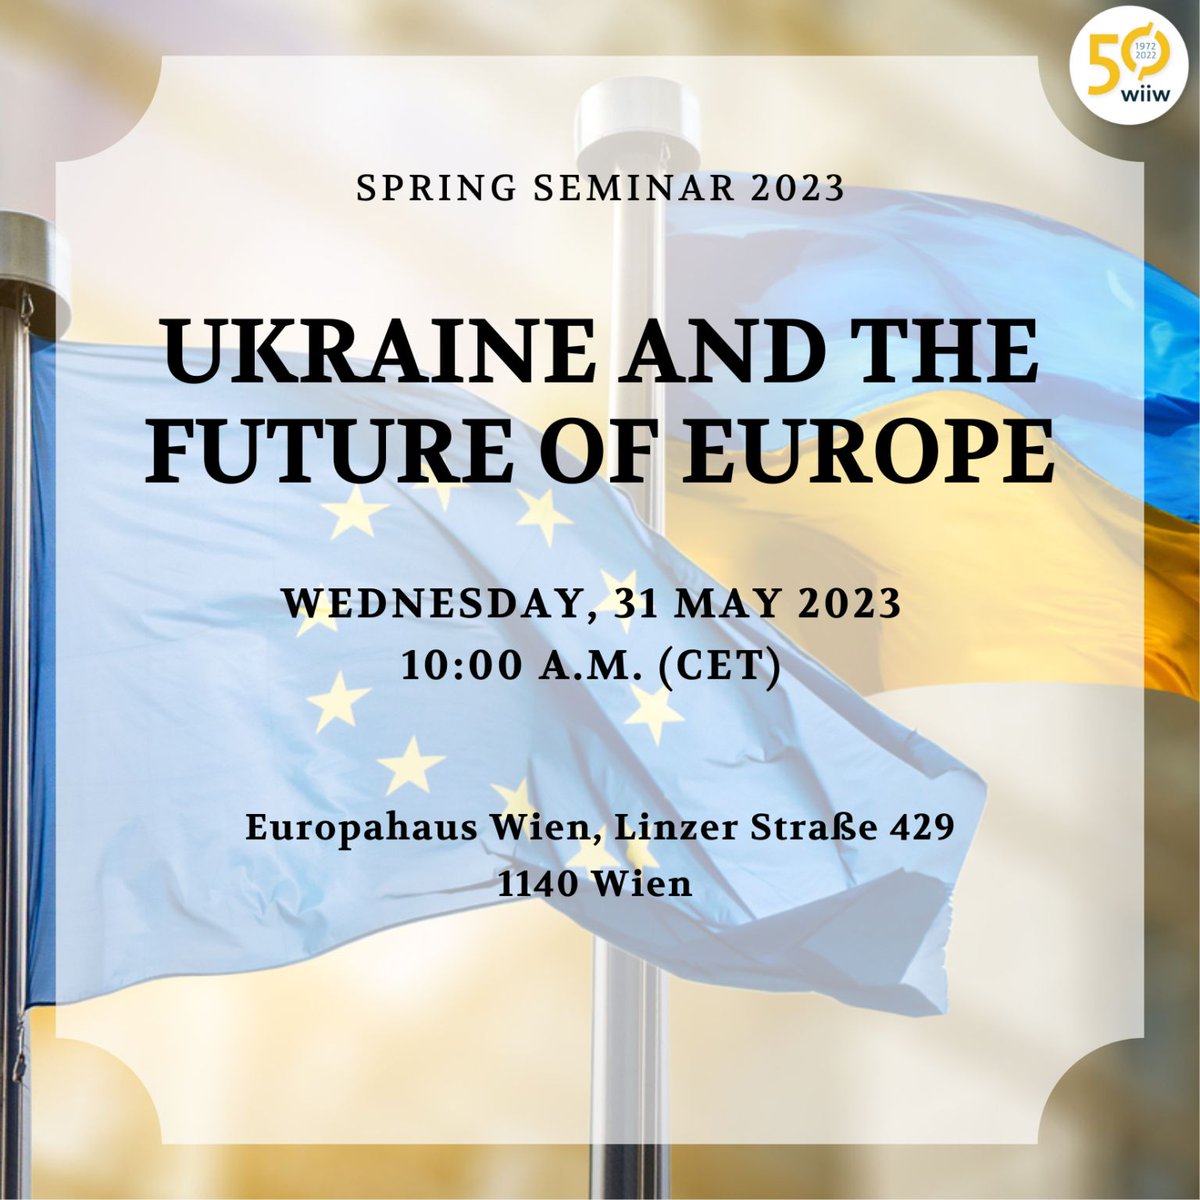 Don't miss tomorrow, 31 May, 10:00 CET: #Ukraine and the future of Europe – our Spring Seminar featuring @dkaleniuk, @MishaGlenny, @DeboraRevoltel1, @cengizkhan, @senoj_erialc, @mariademertzis, @MiriamKosmehl, @CathrinKahlweit et al. Programme: ➡️rb.gy/13h1w